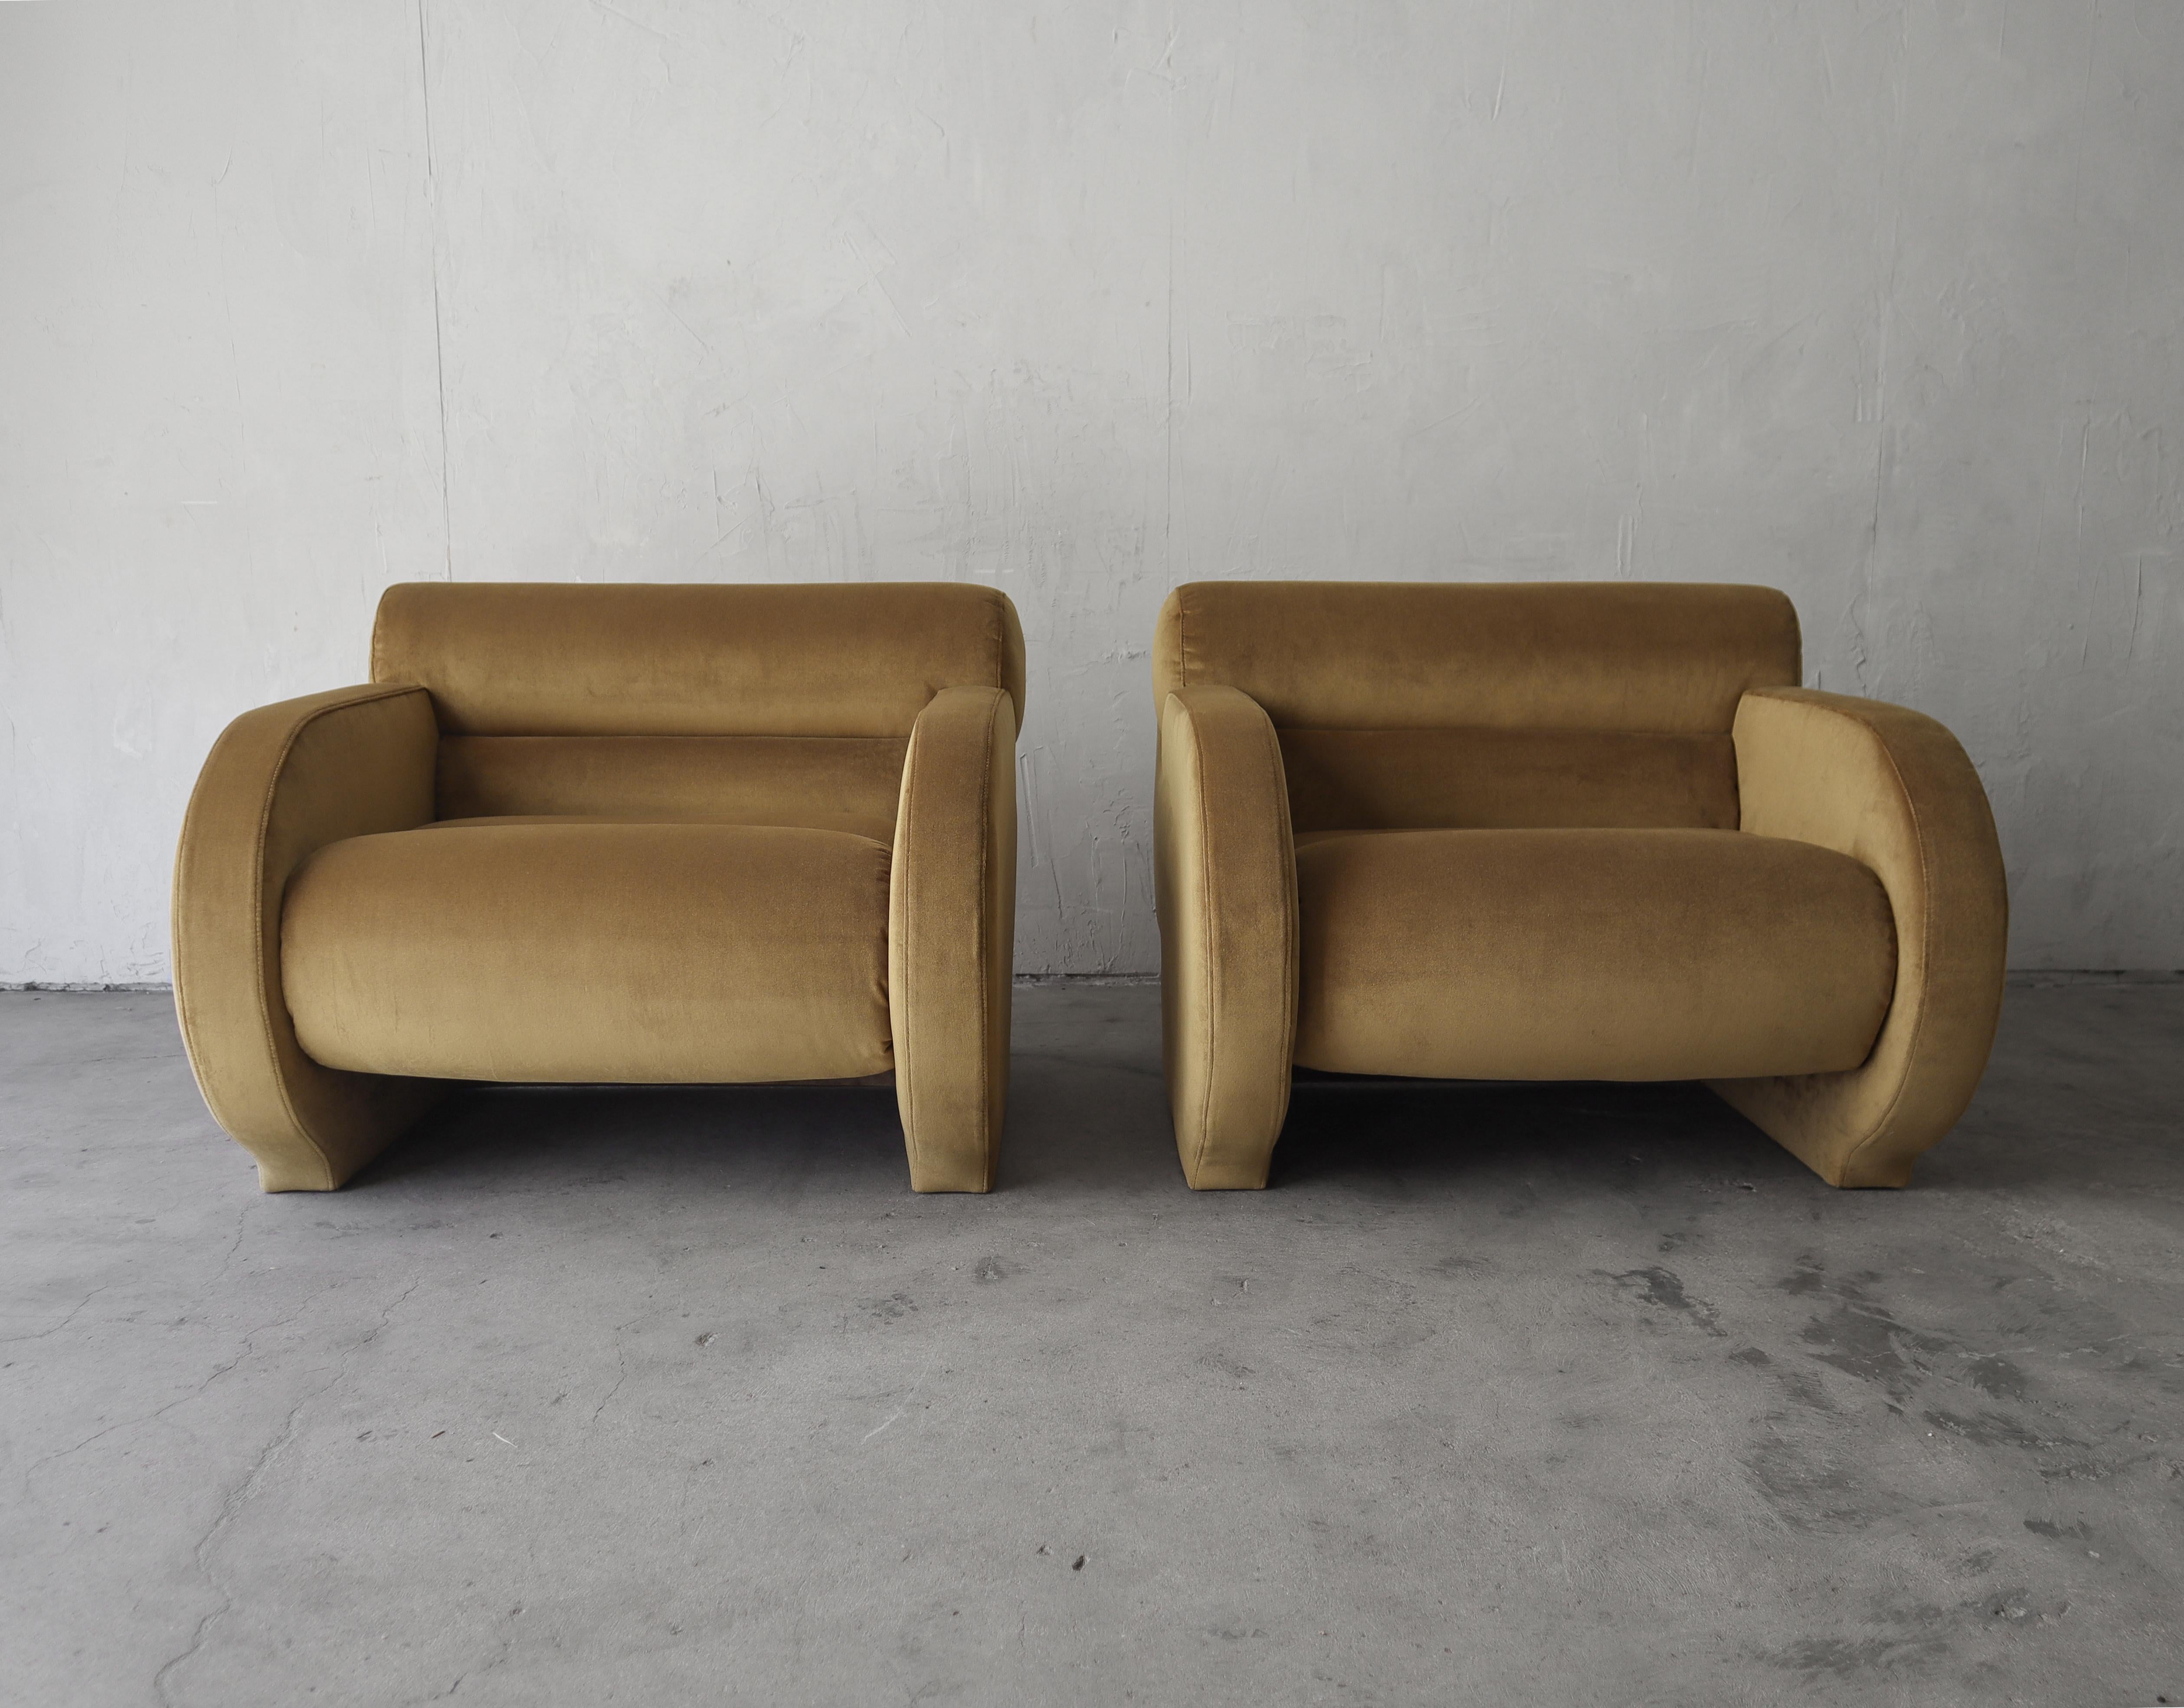 20th Century Pair of Sculptural Post Modern Lounge Chairs by Vladimir Kagan